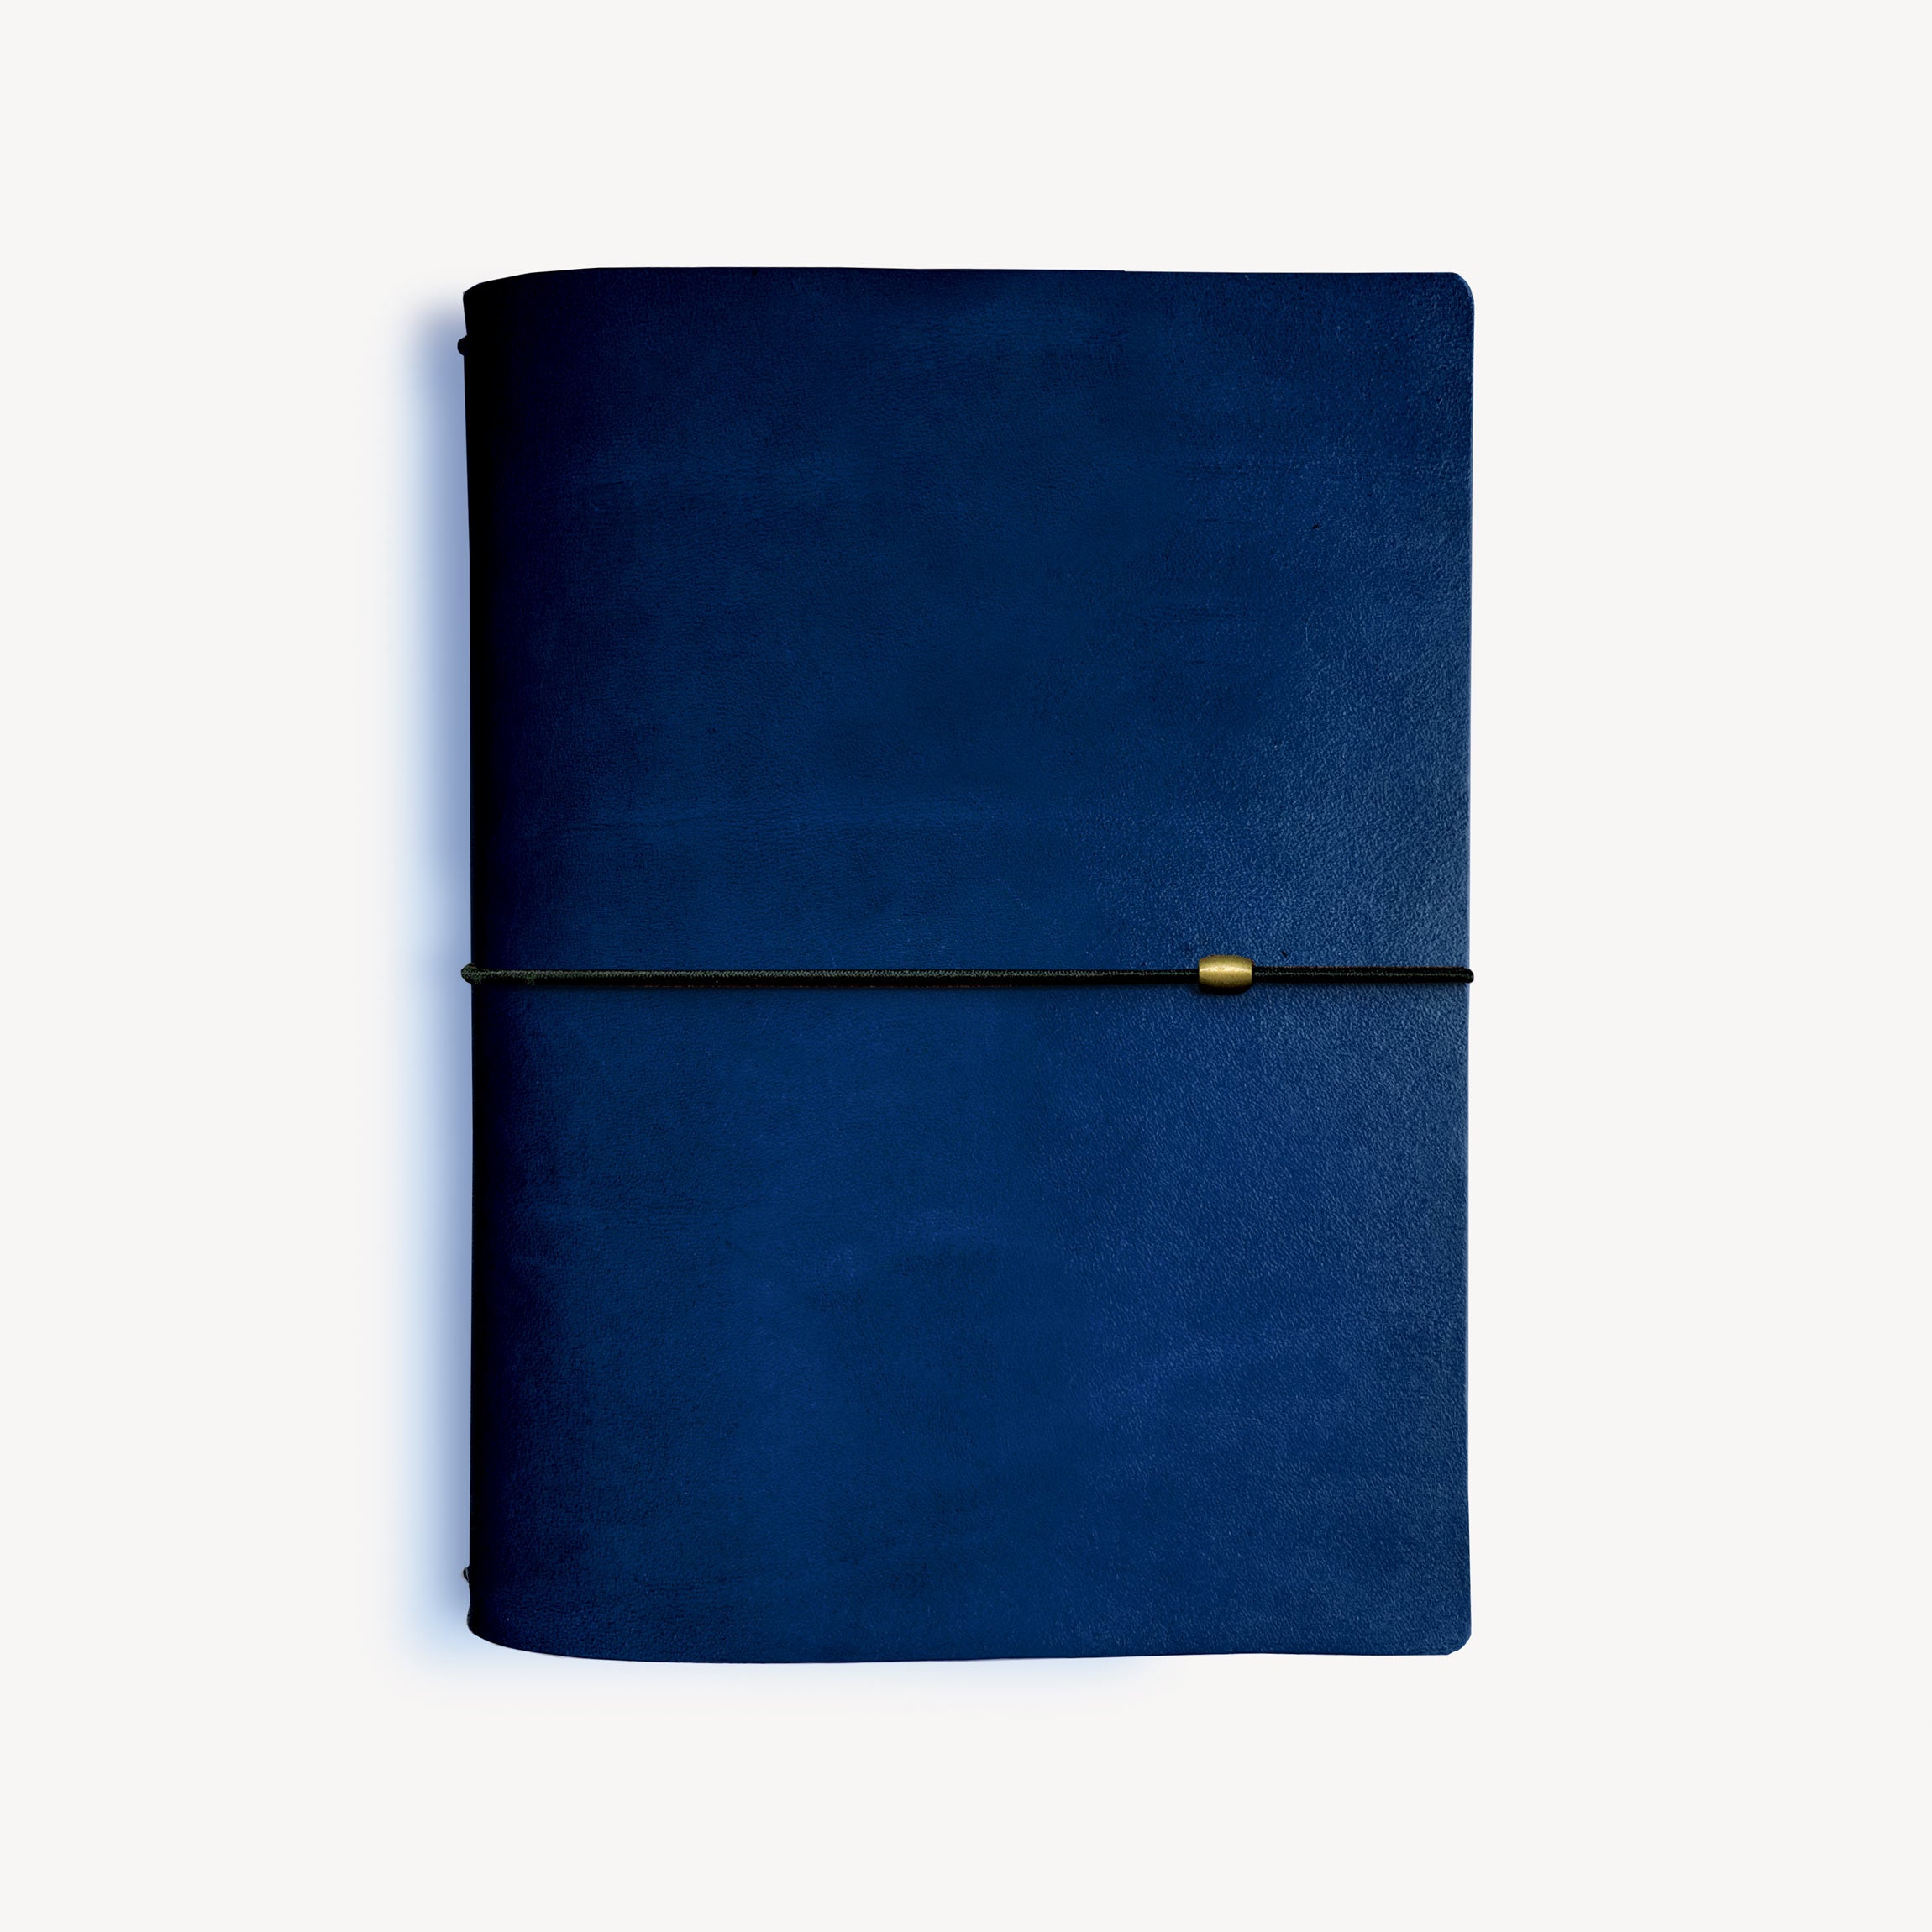 Acrobat Leather Cover. B6 Size. Blue Gin color. Limited Edition - Soumkine